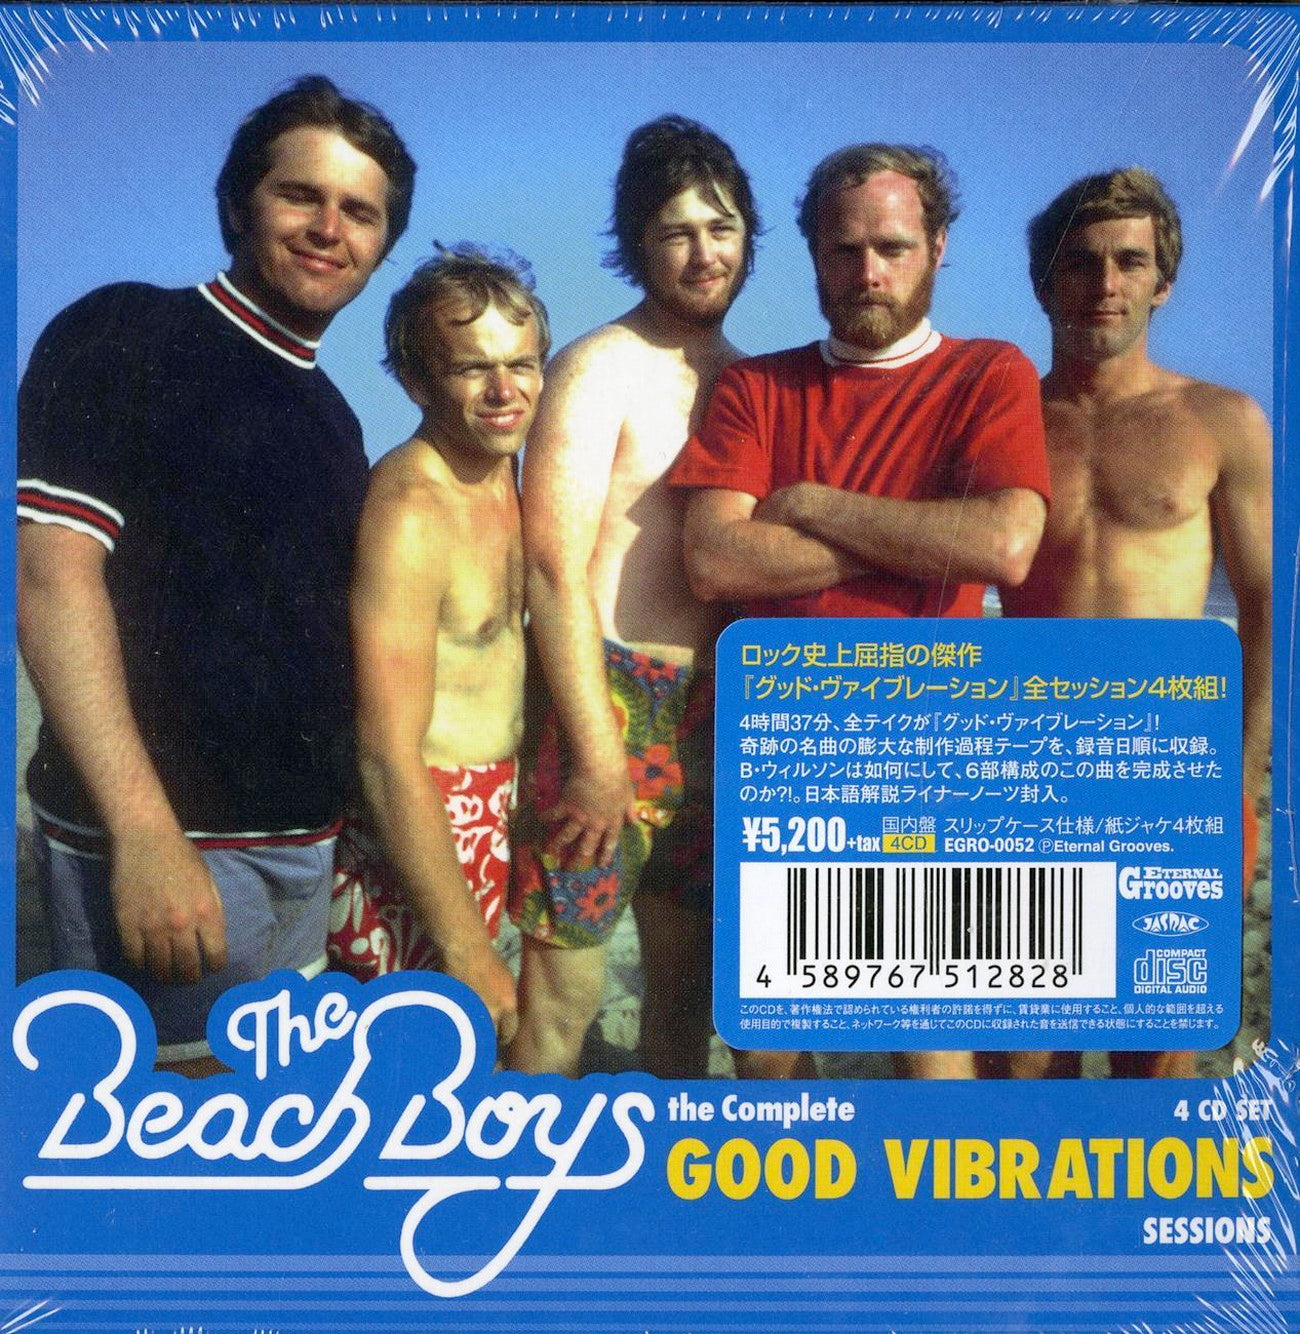 The Beach Boys - The Complete Good Vibrations Sessions - Japan Mini LP 4 CD Box set